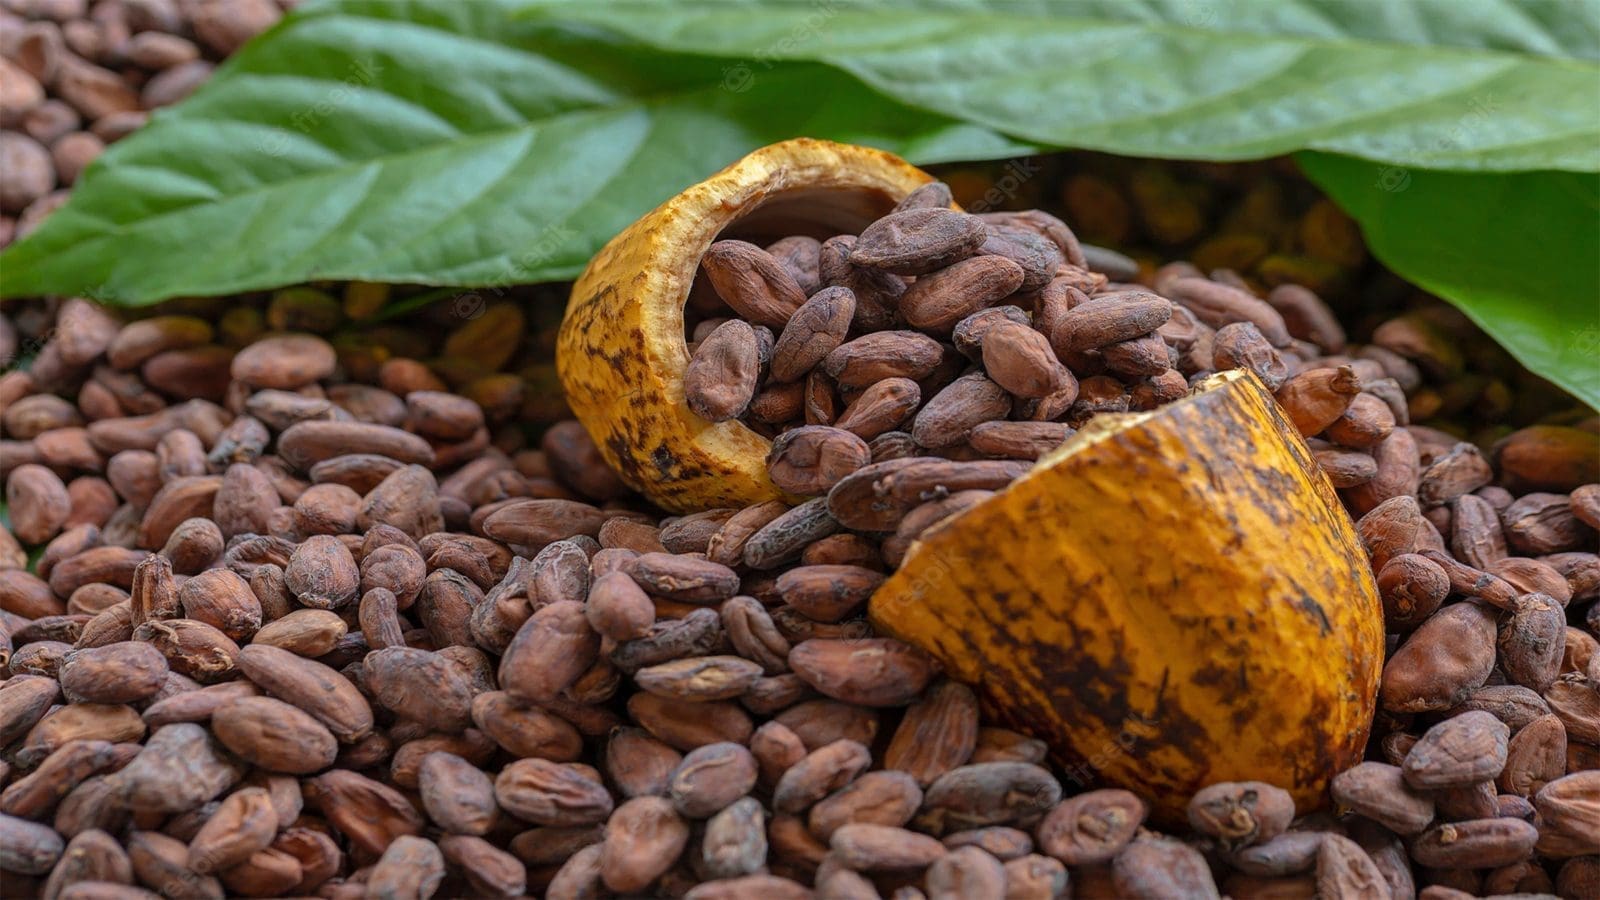 Study advises mitigation measures for Cadmium, Lead levels in cocoa